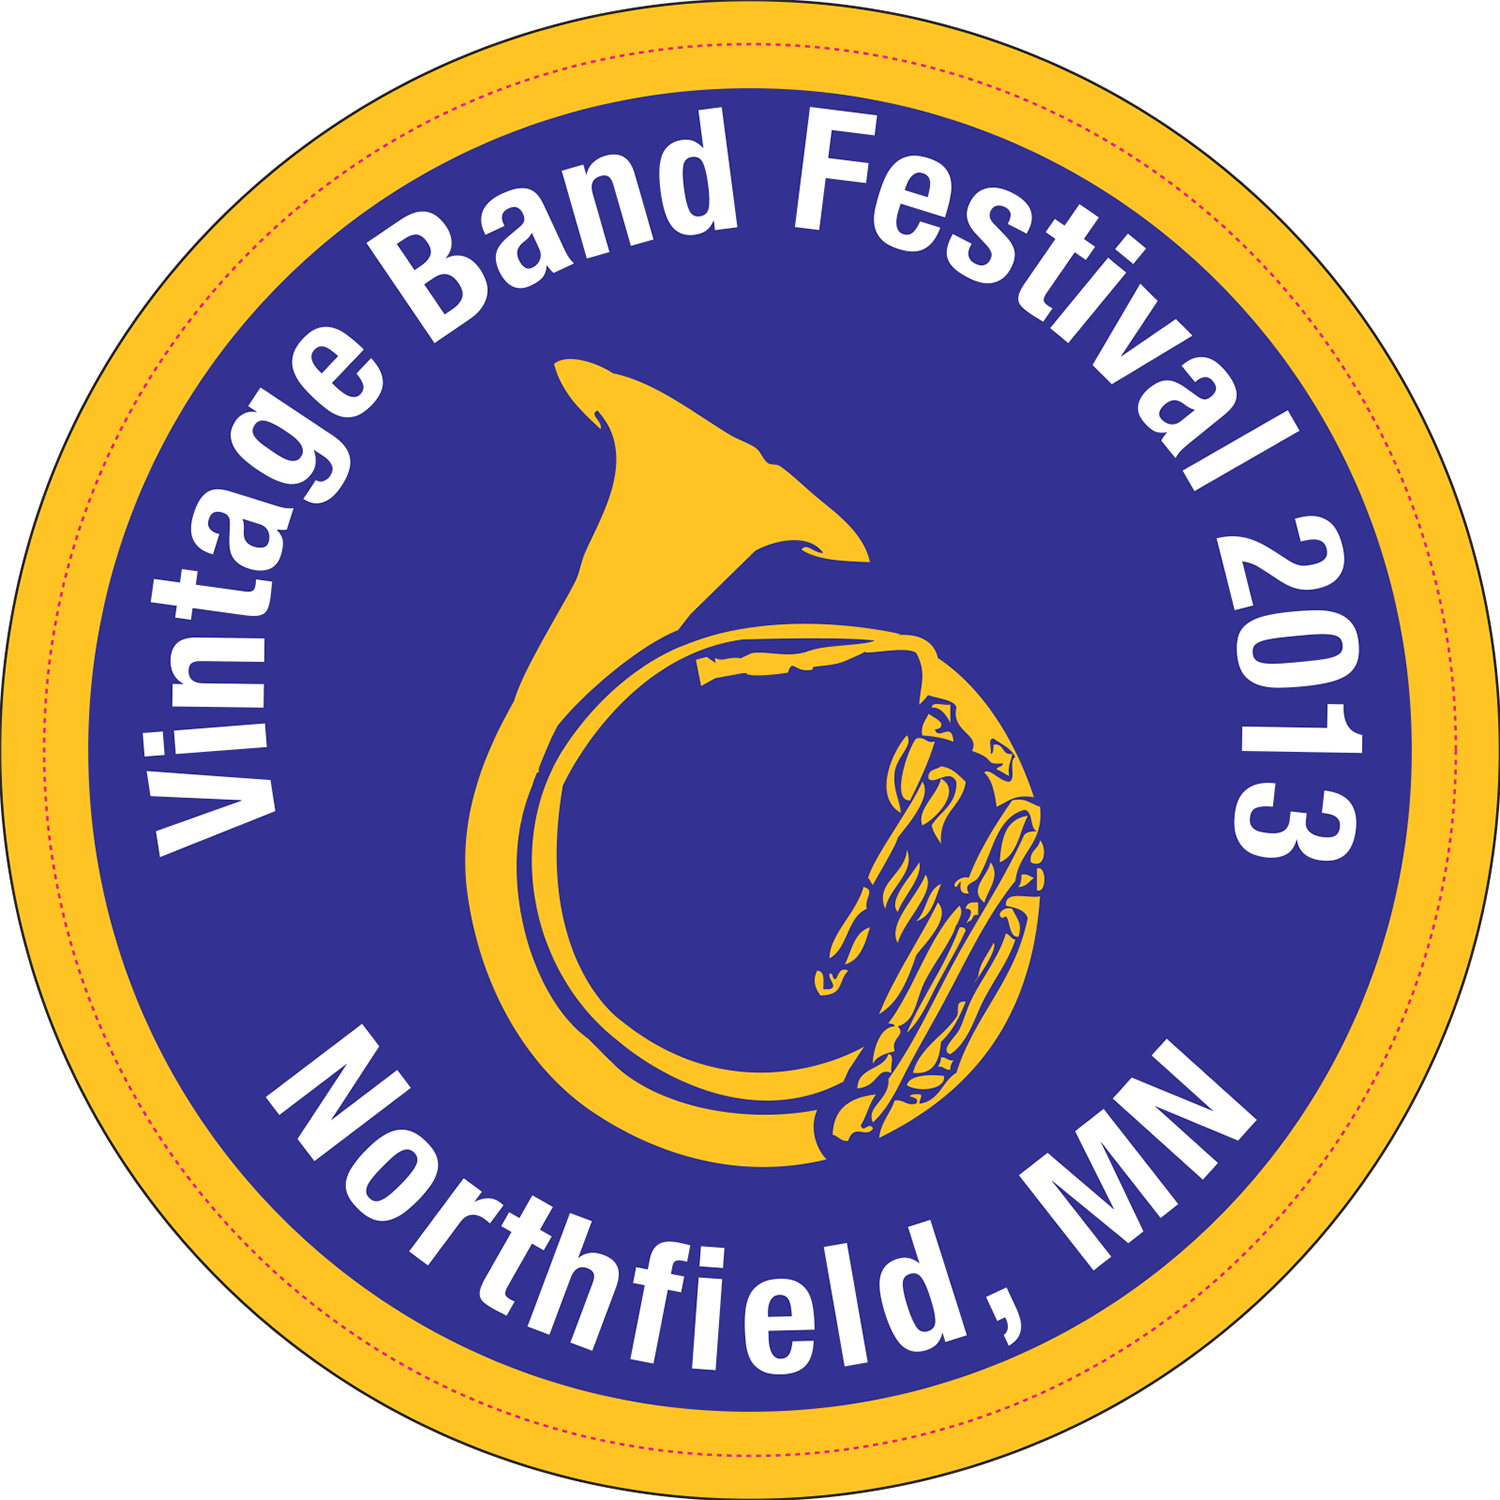 Vintage Band Festival logo